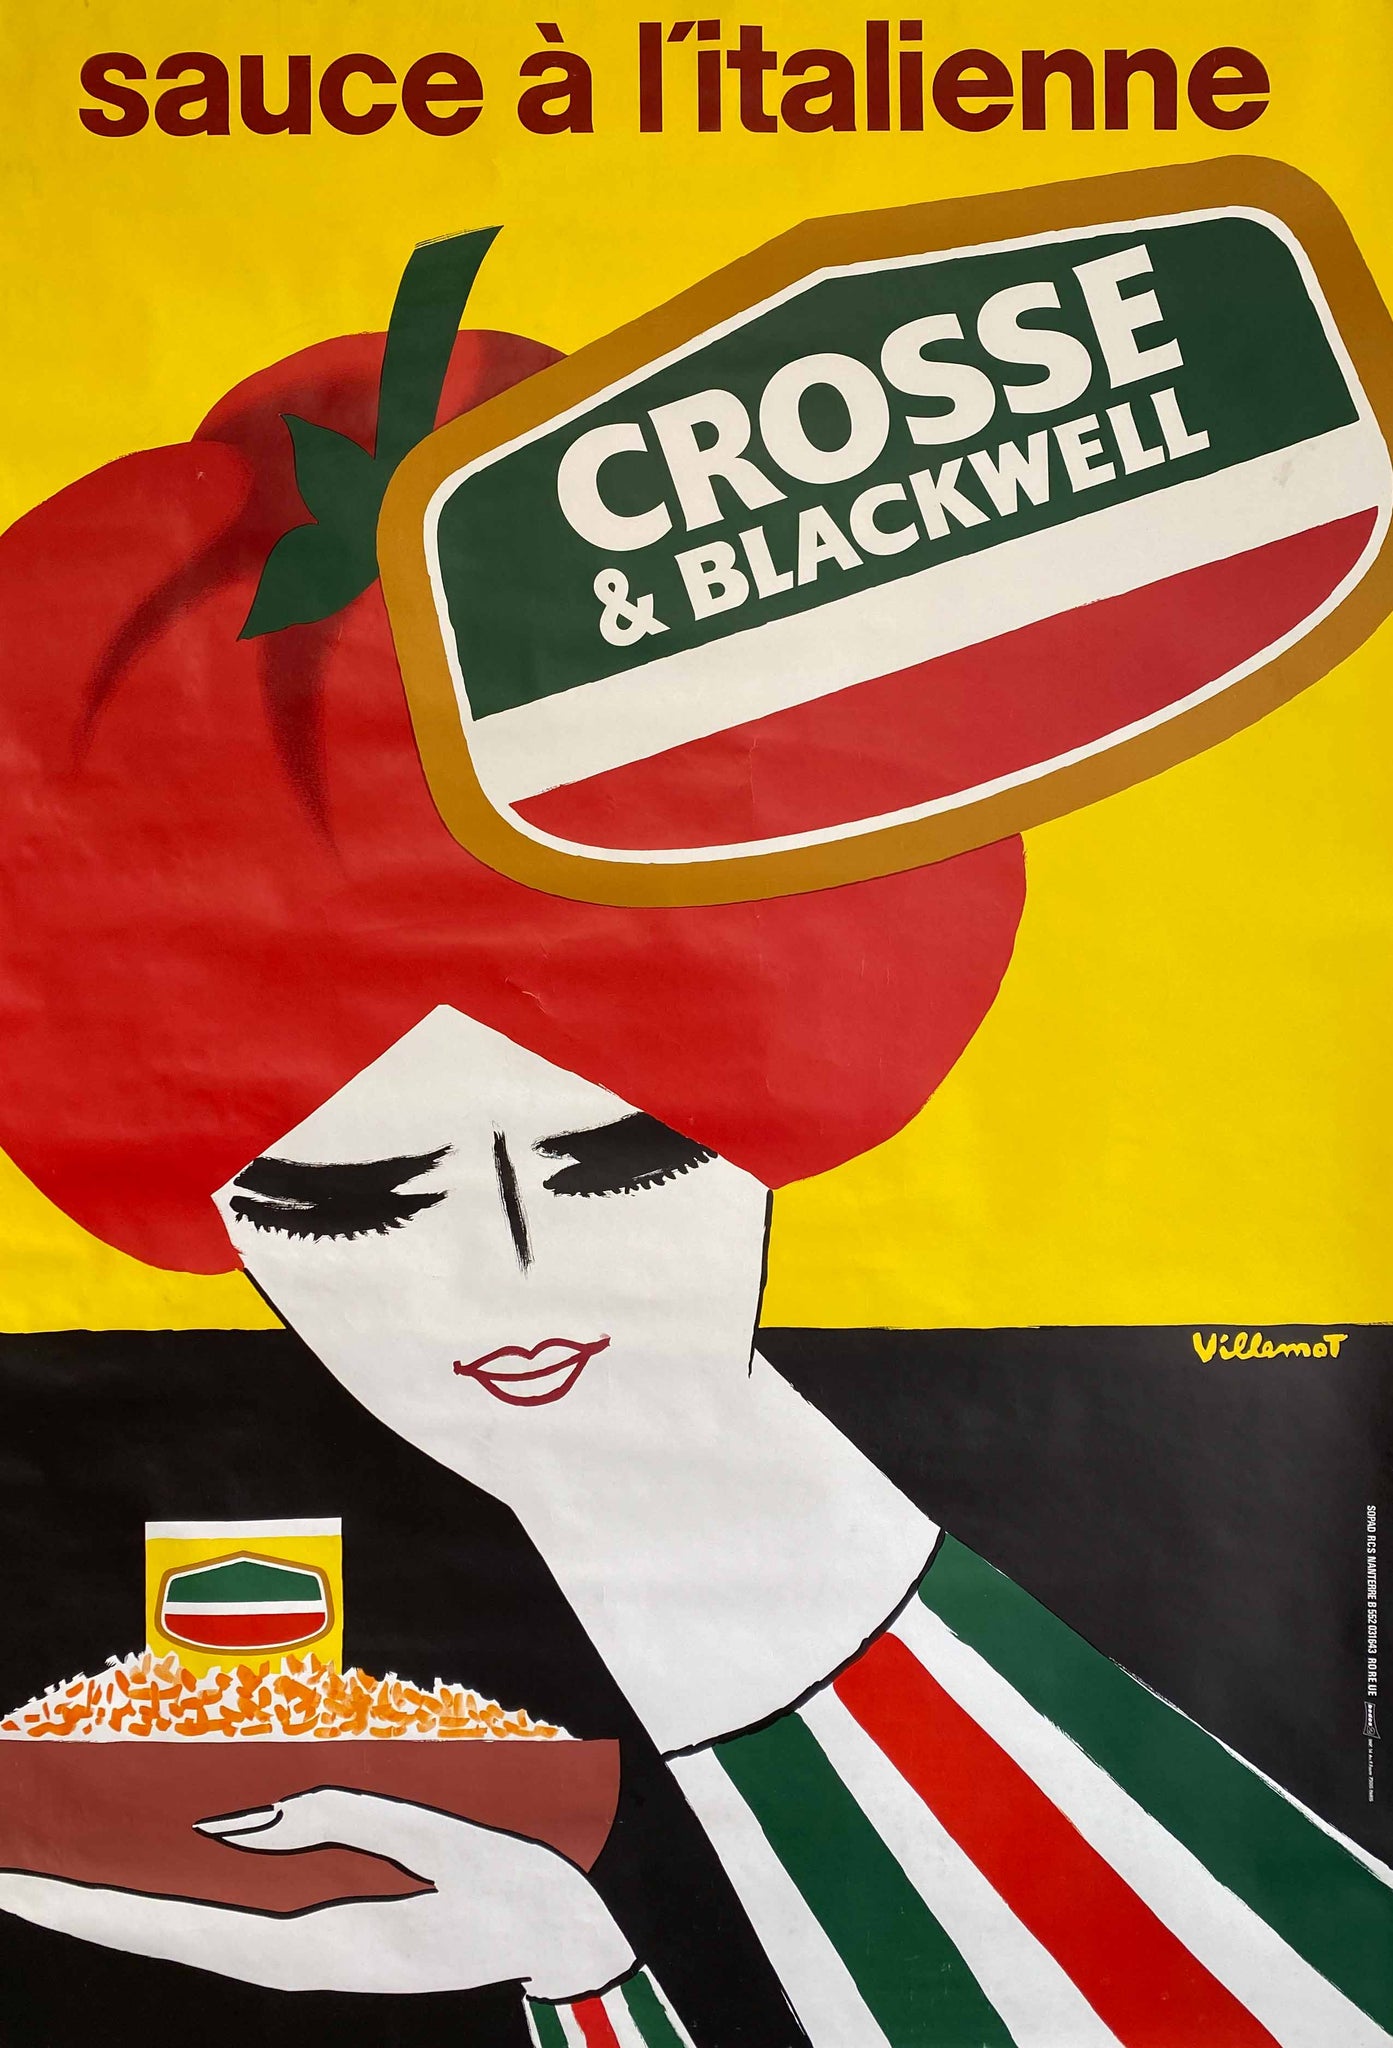 Affiche Originale Crosse & Blackwell Sauce à l'italienne Par Bernard Villemot, 1981